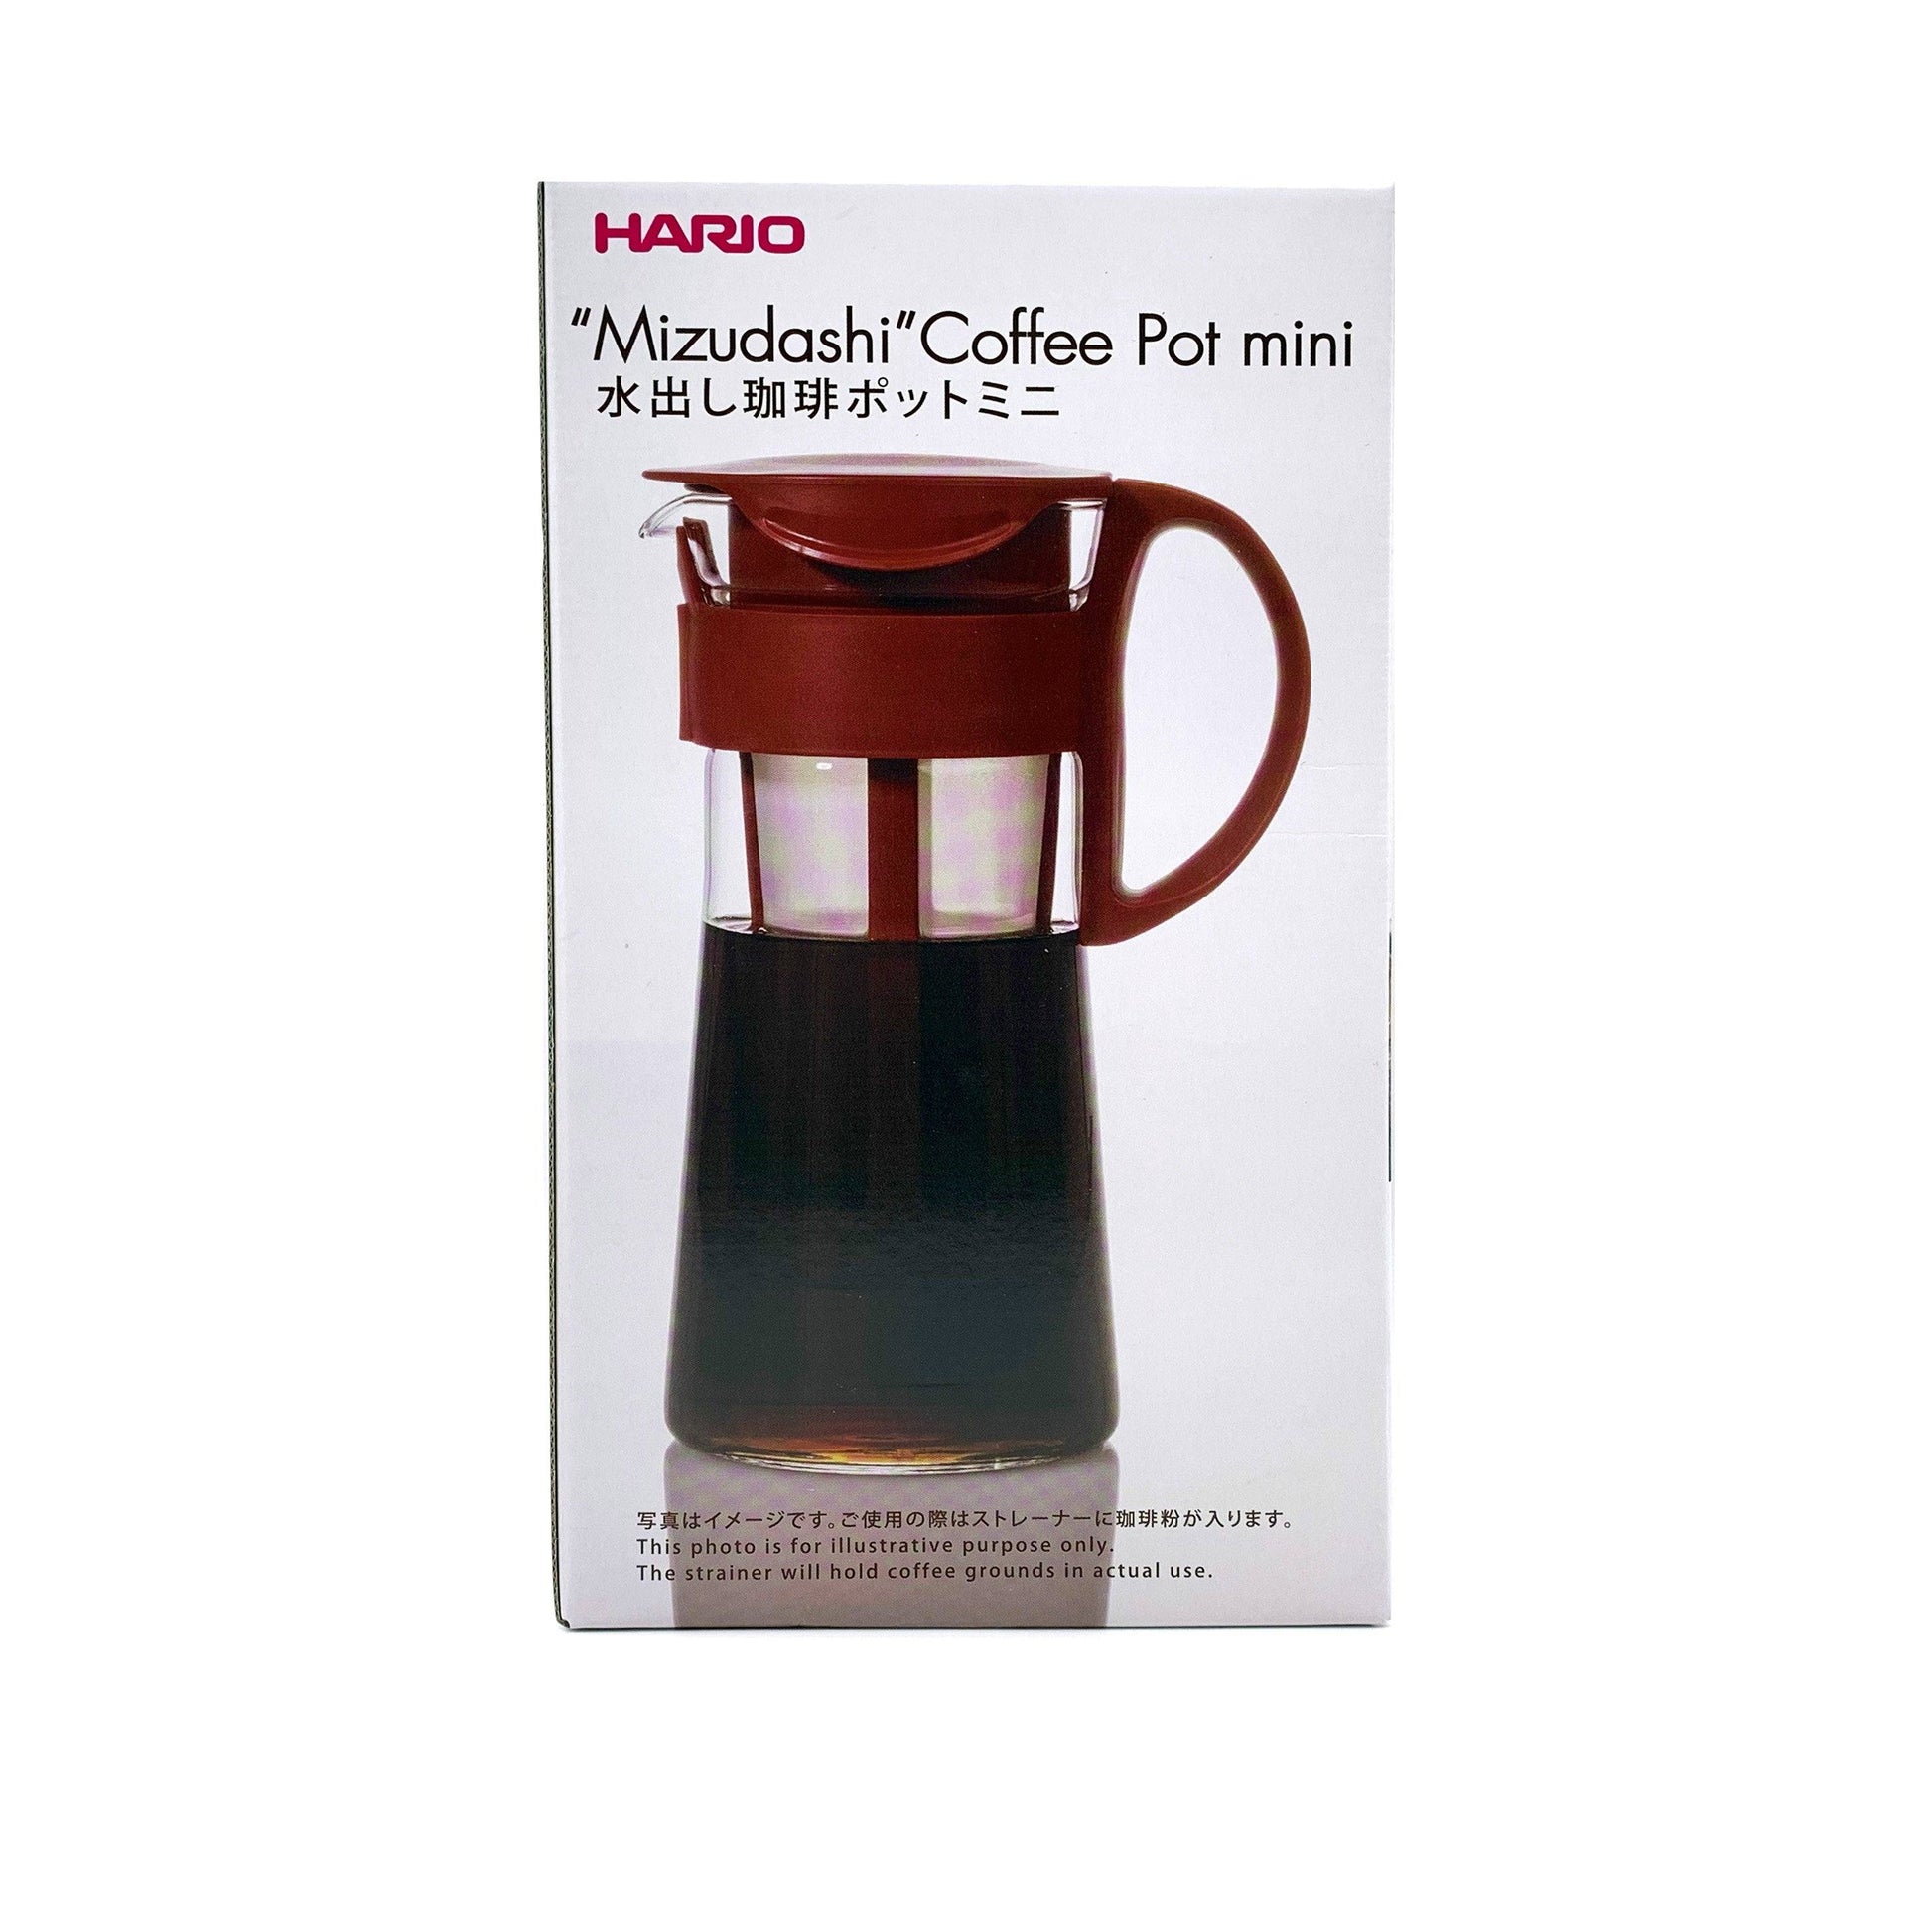 Mizudashi (Cold Brew) Coffee Maker – Hario USA